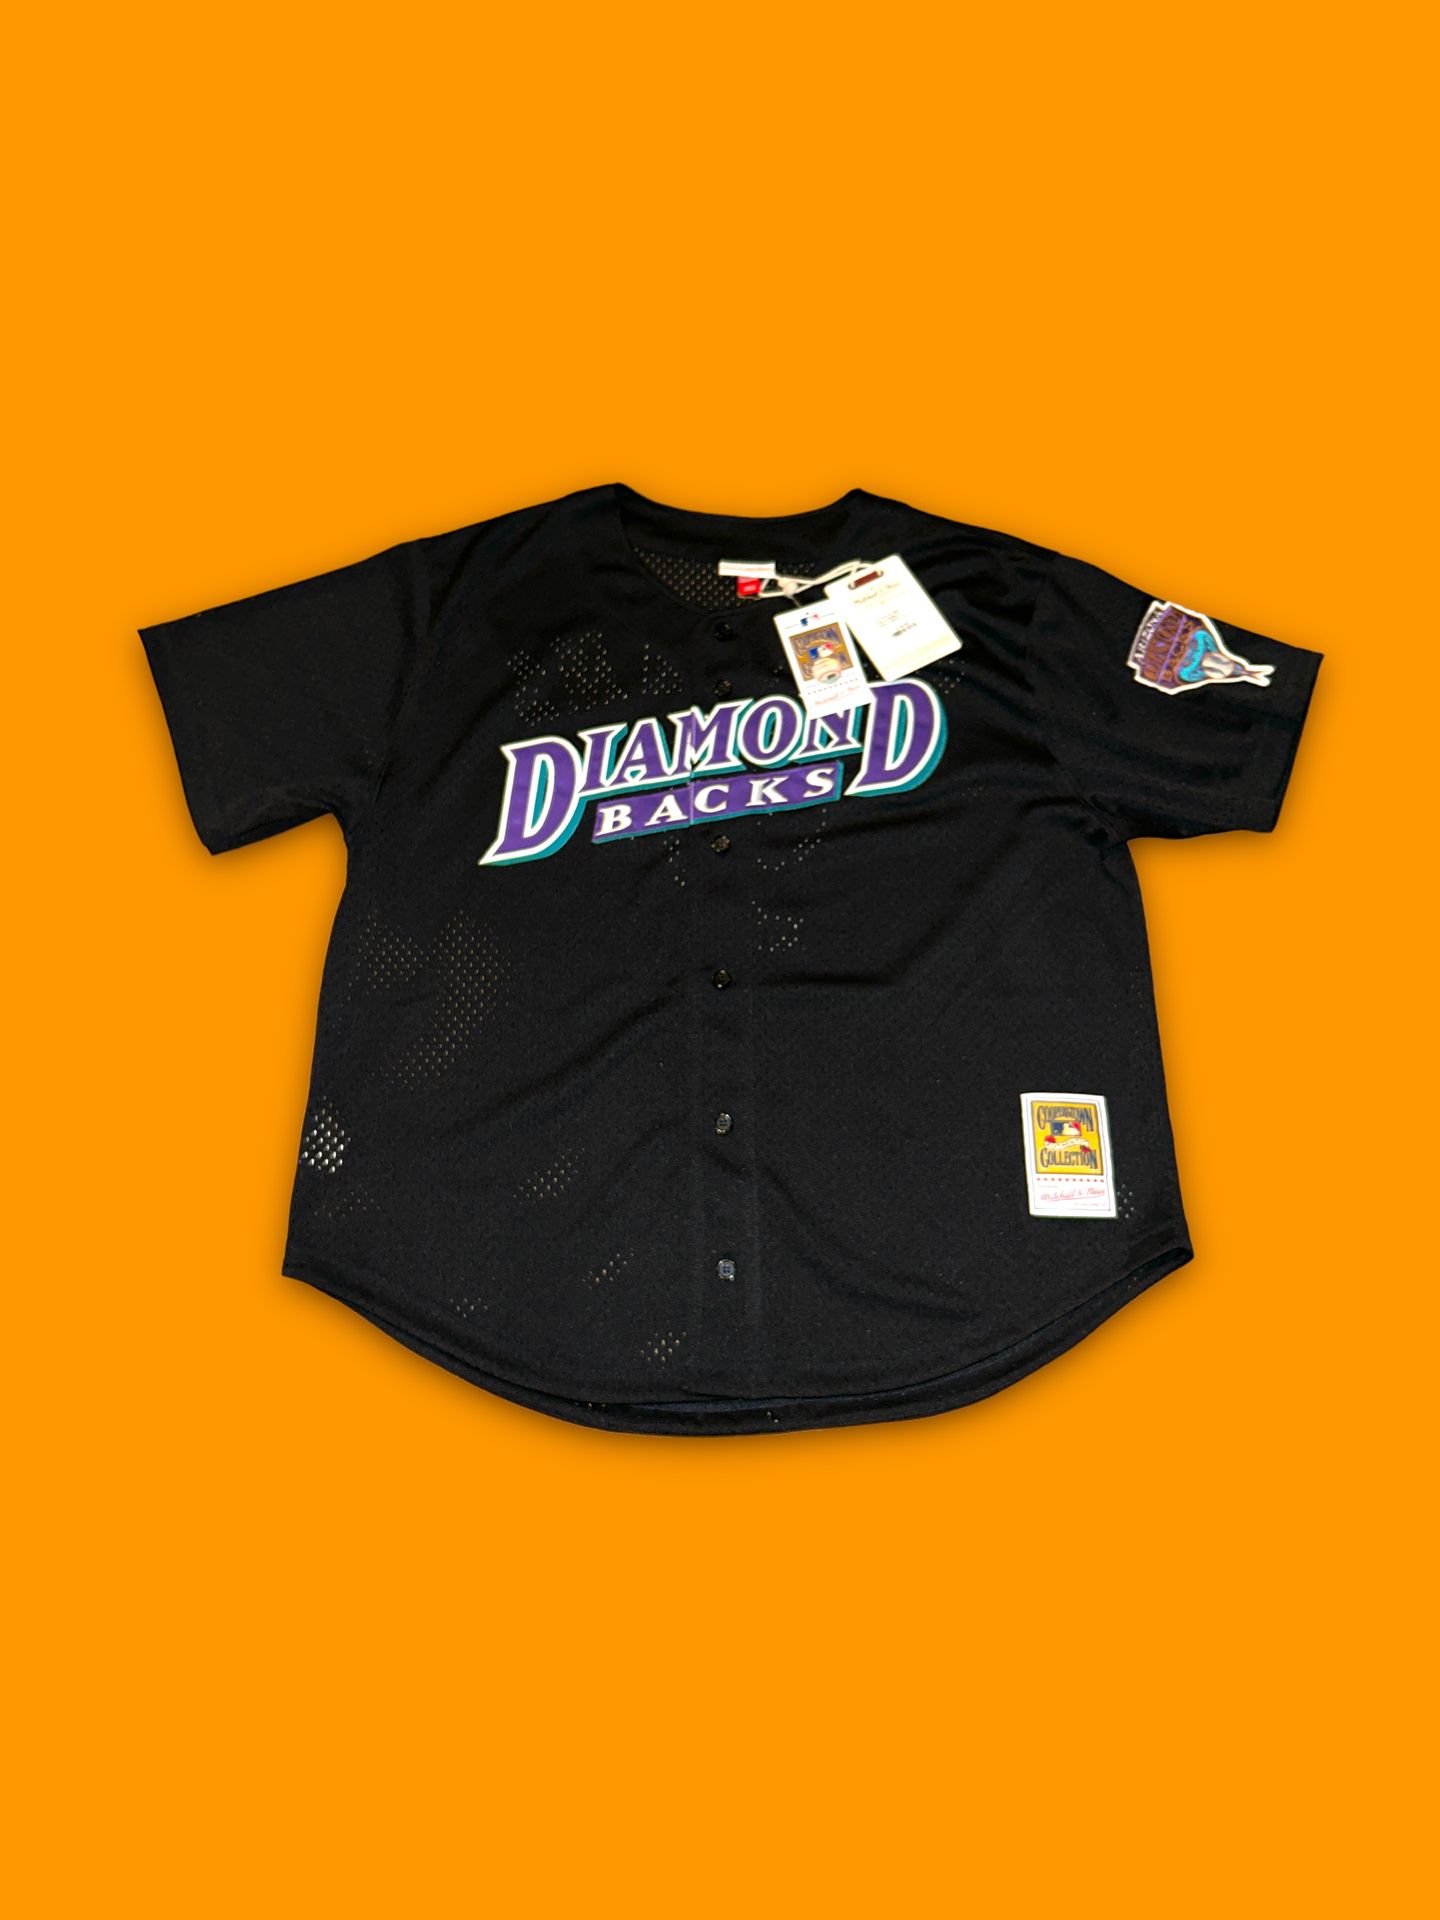 Arizona Diamondbacks Mitchell & Ness jersey for Sale in Phoenix